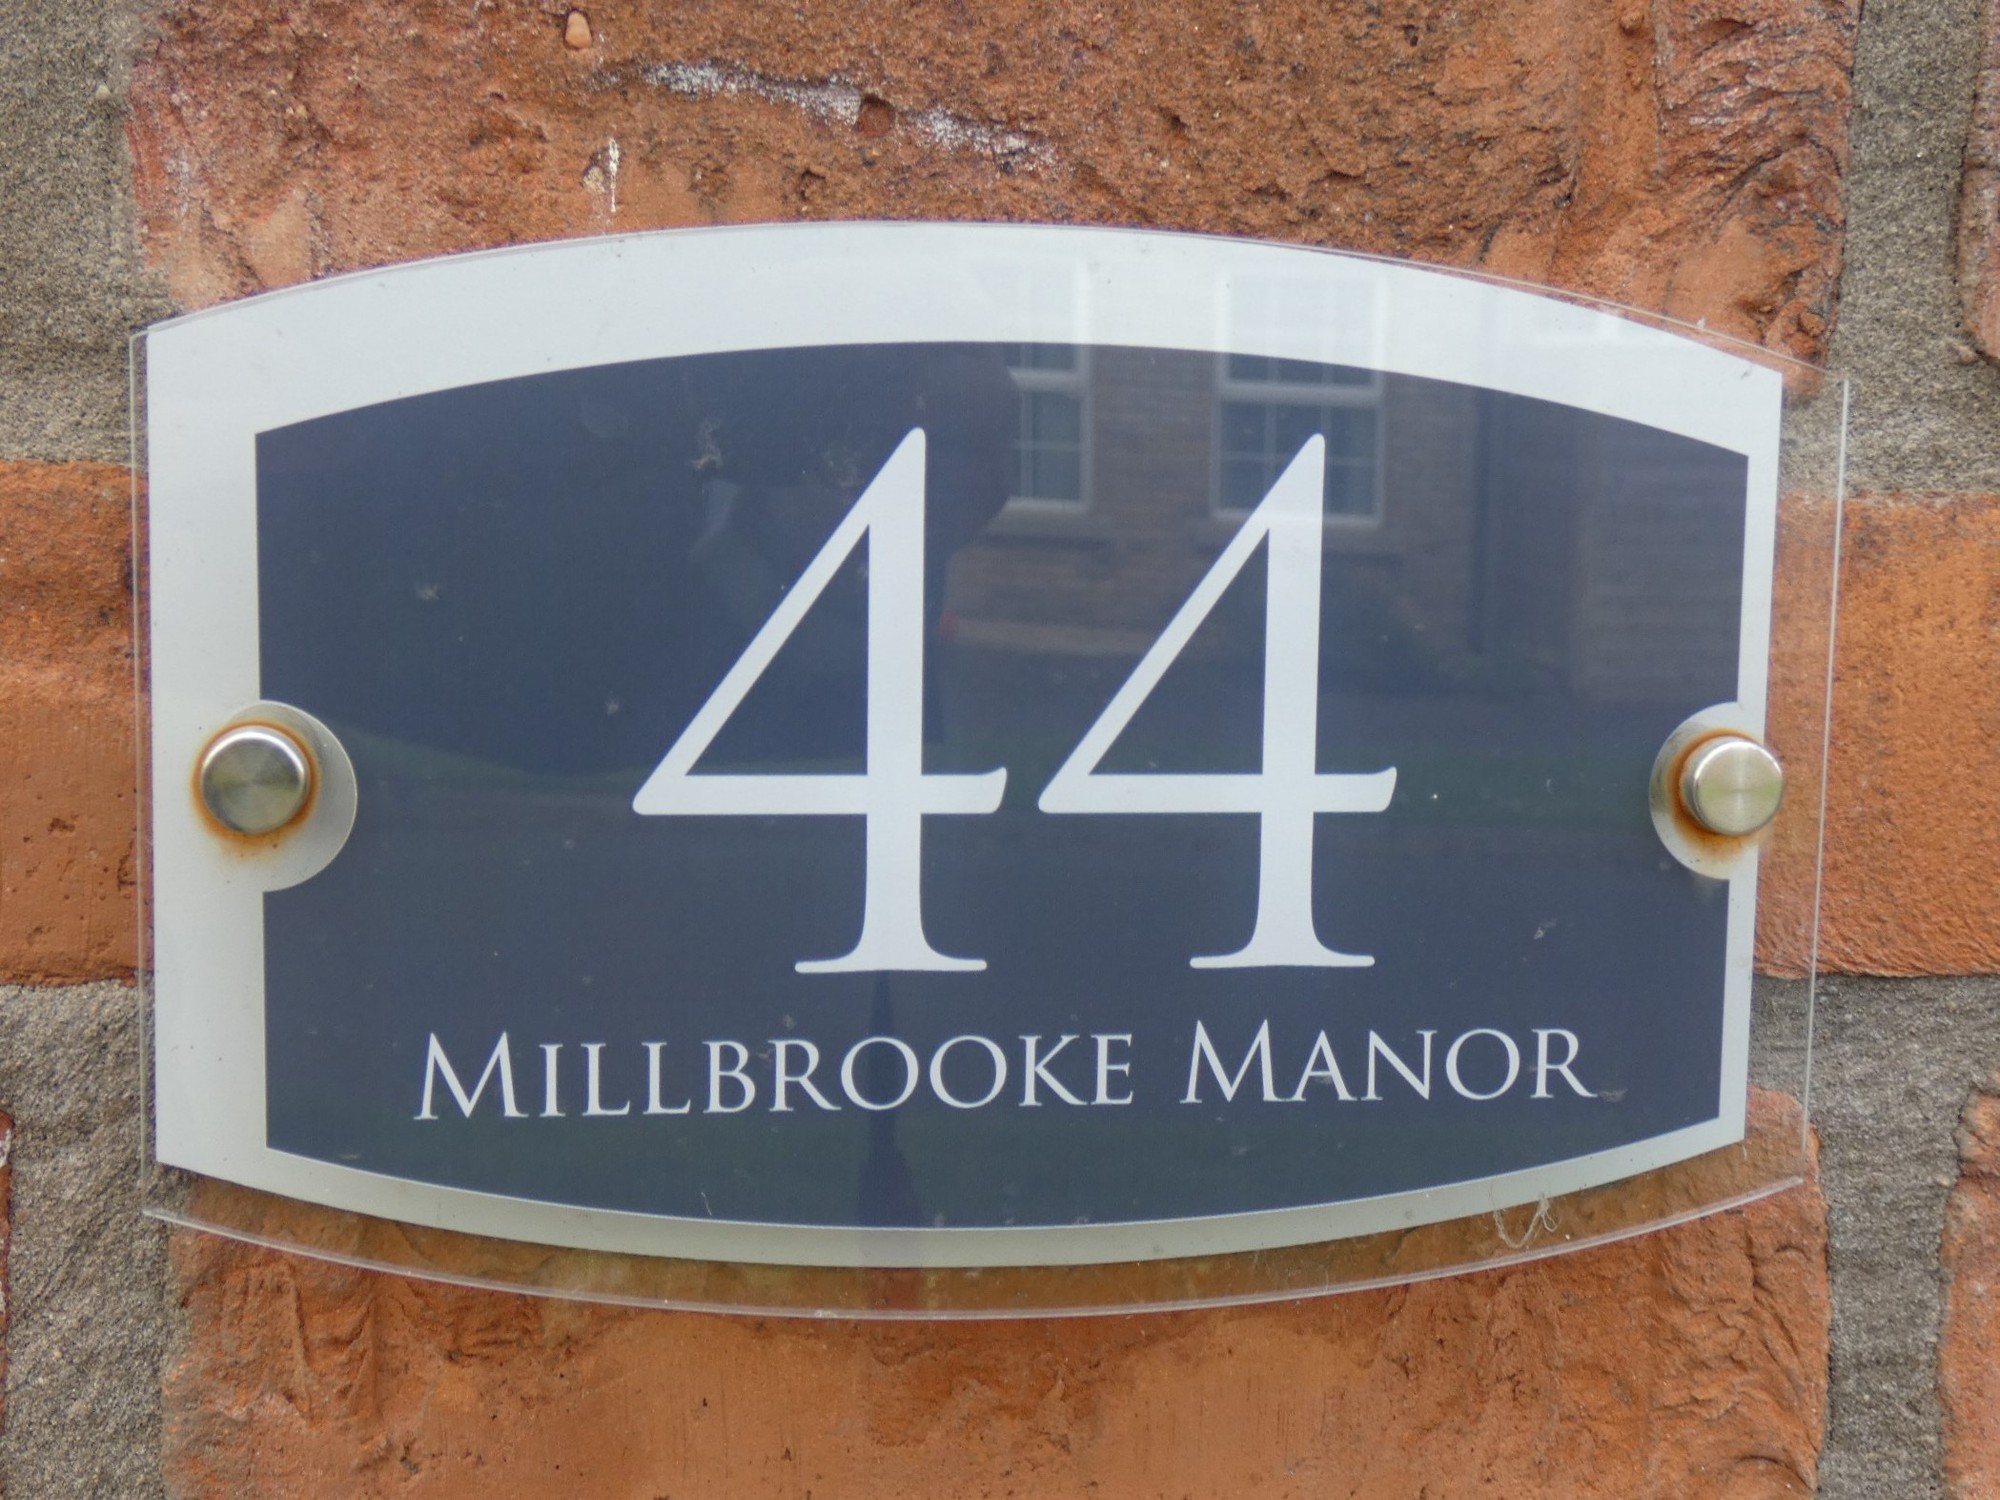 44 Millbrooke Manor